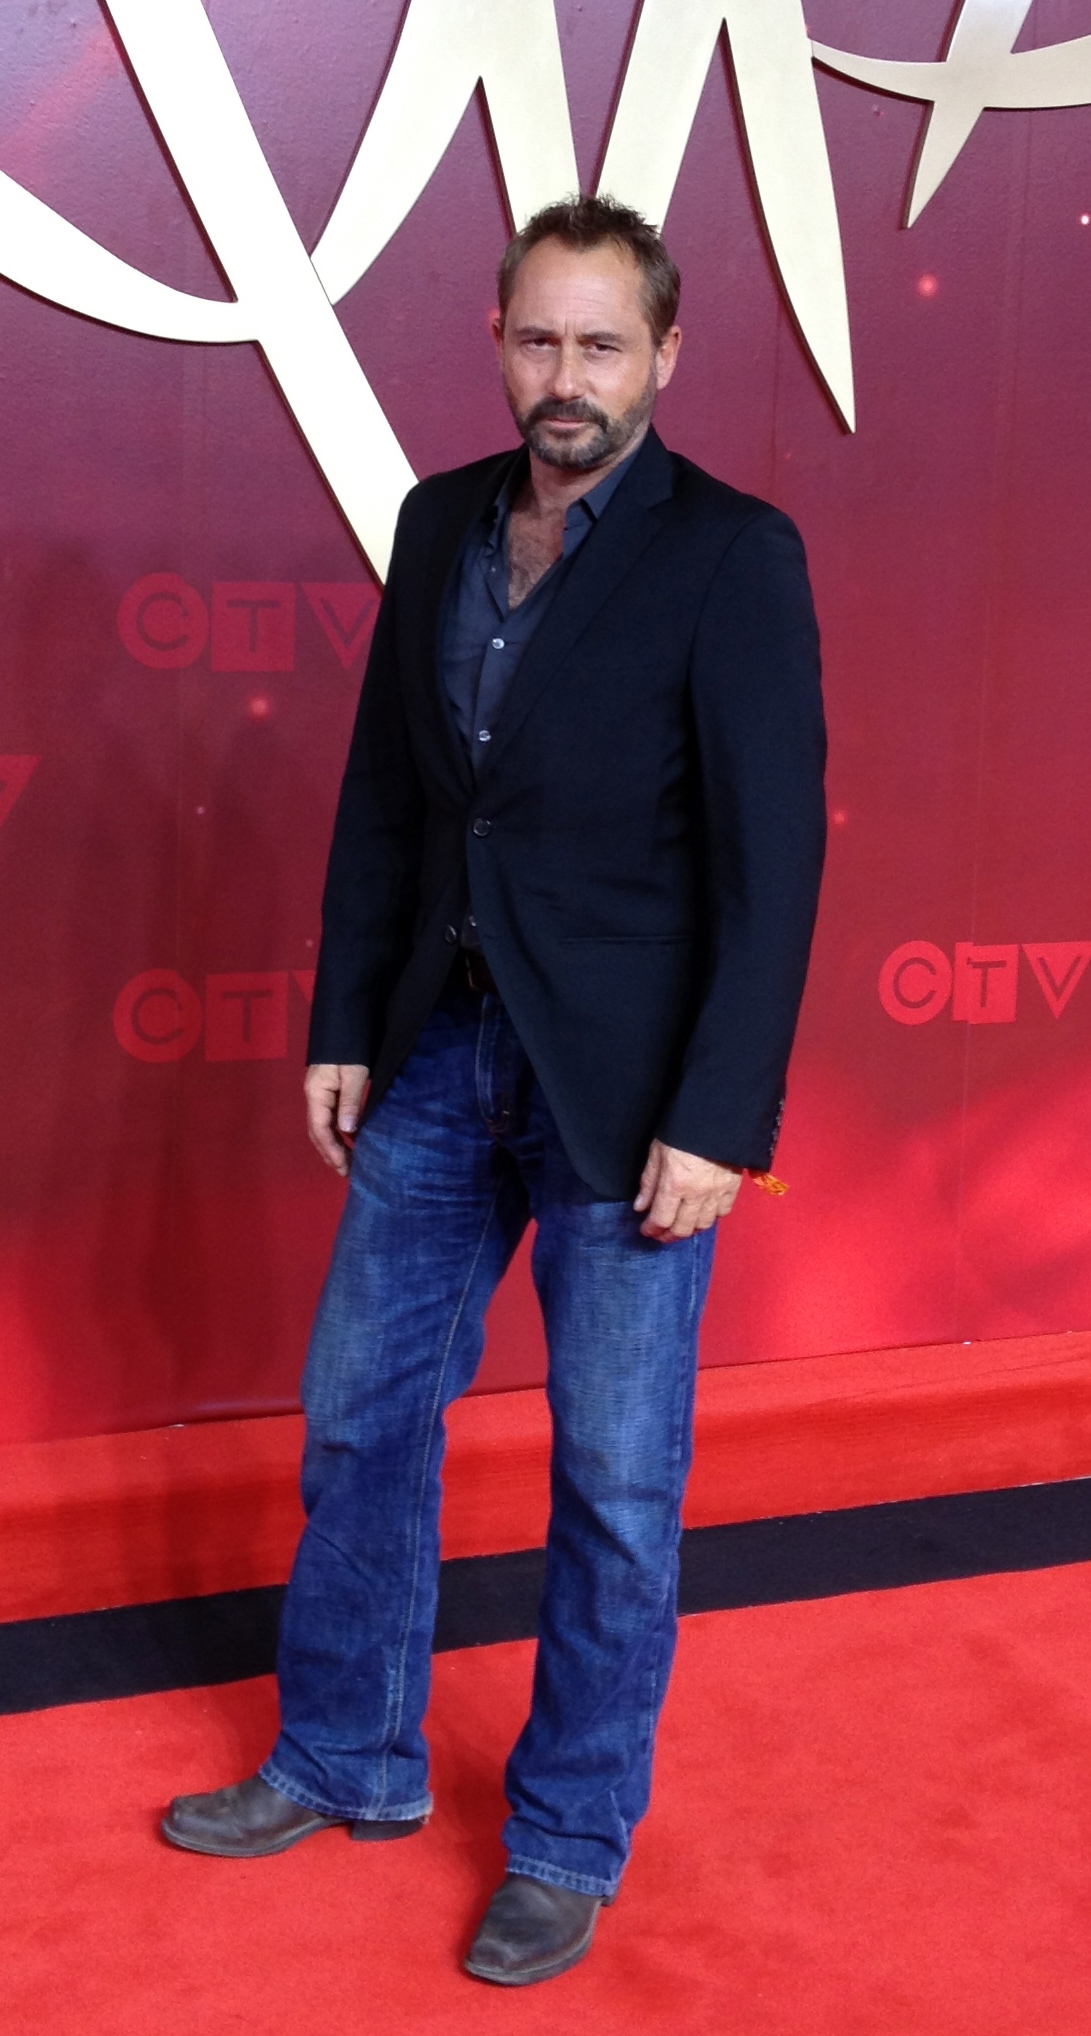 CTV Upfronts, Toronto, Canada 2013